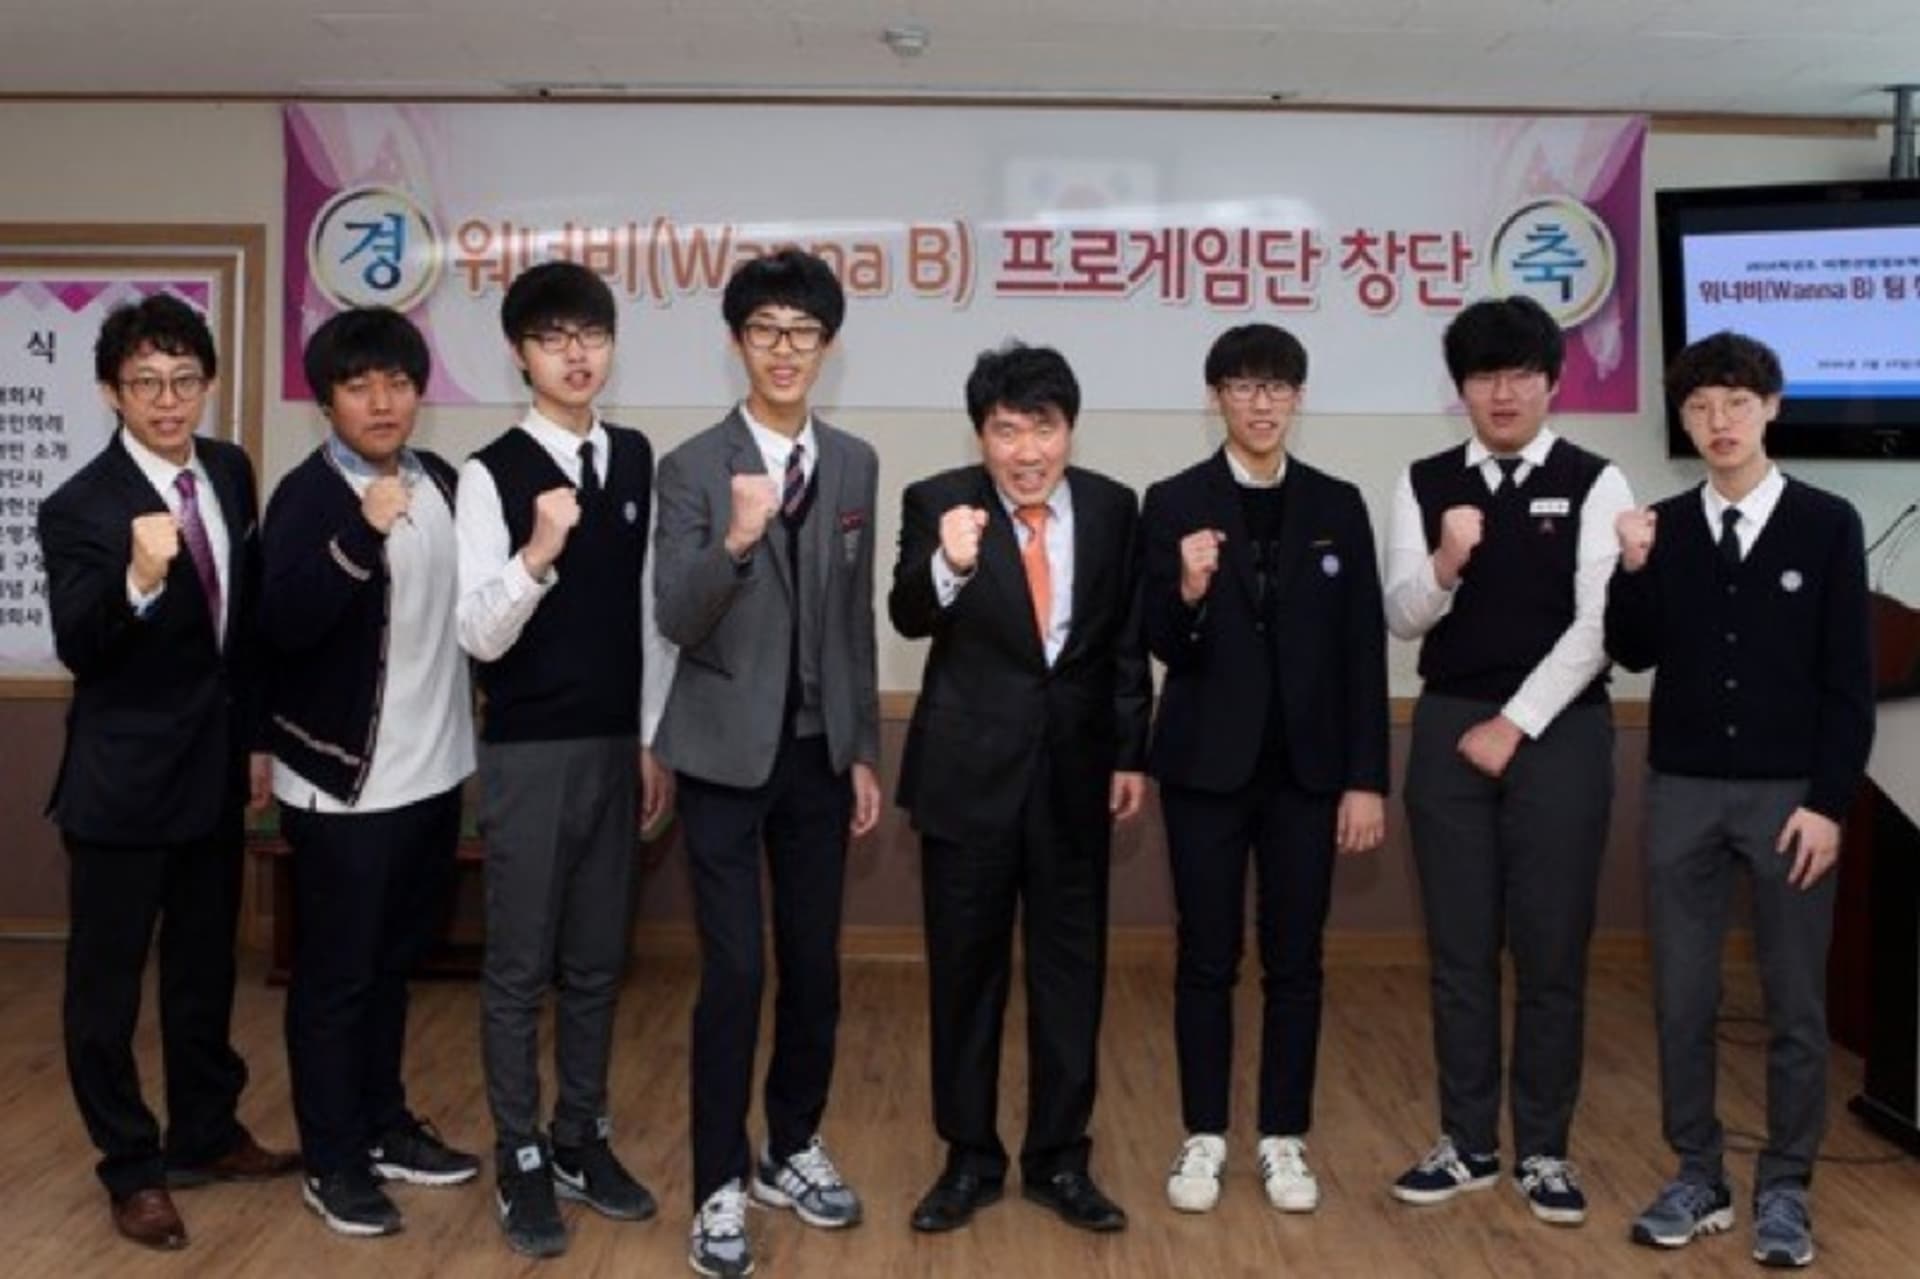 V Koreji esporty pronikají do škol